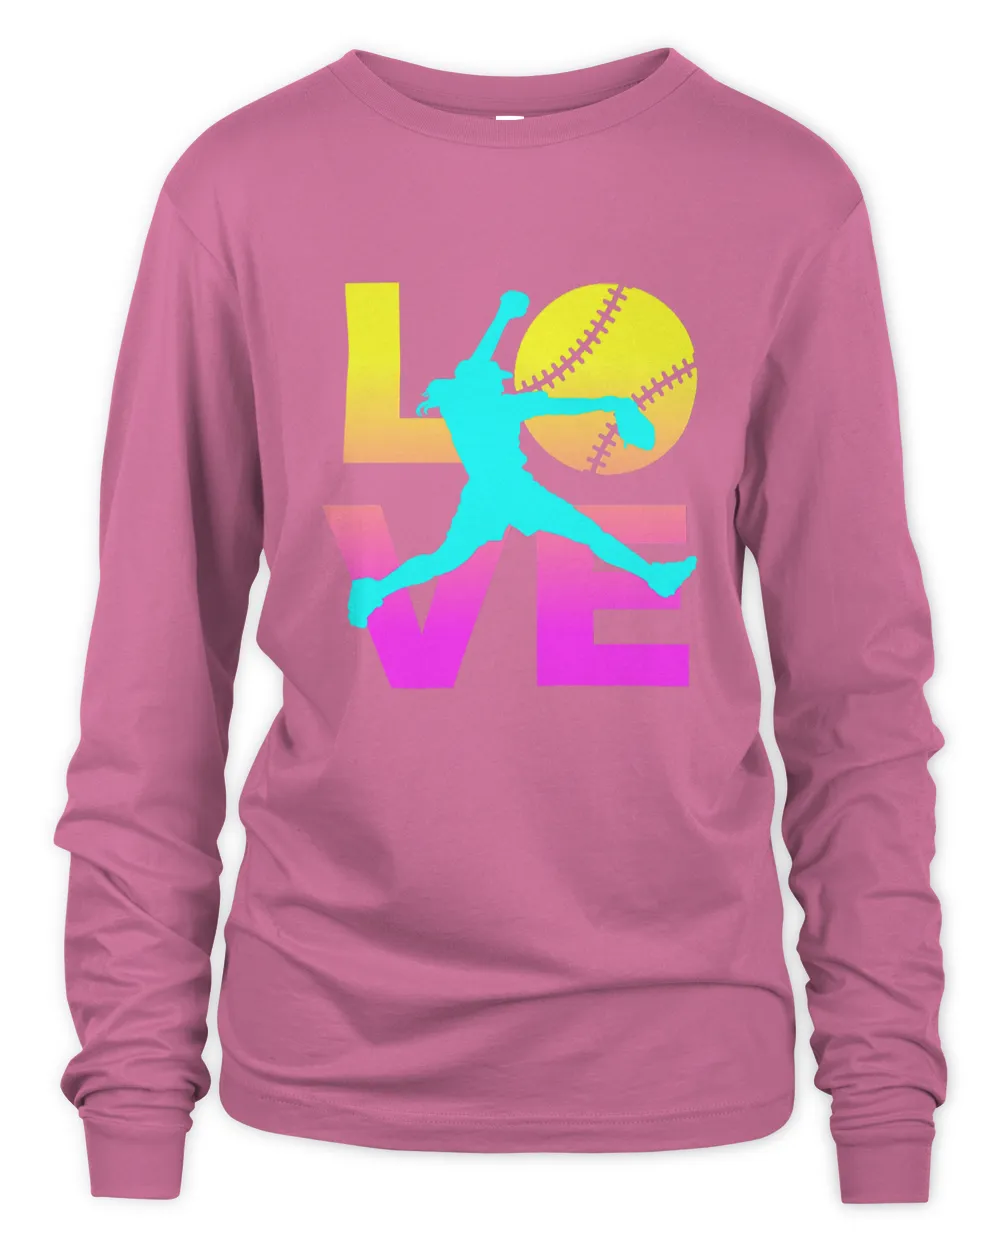 Softball Shirts for Girls Love T-Shirt